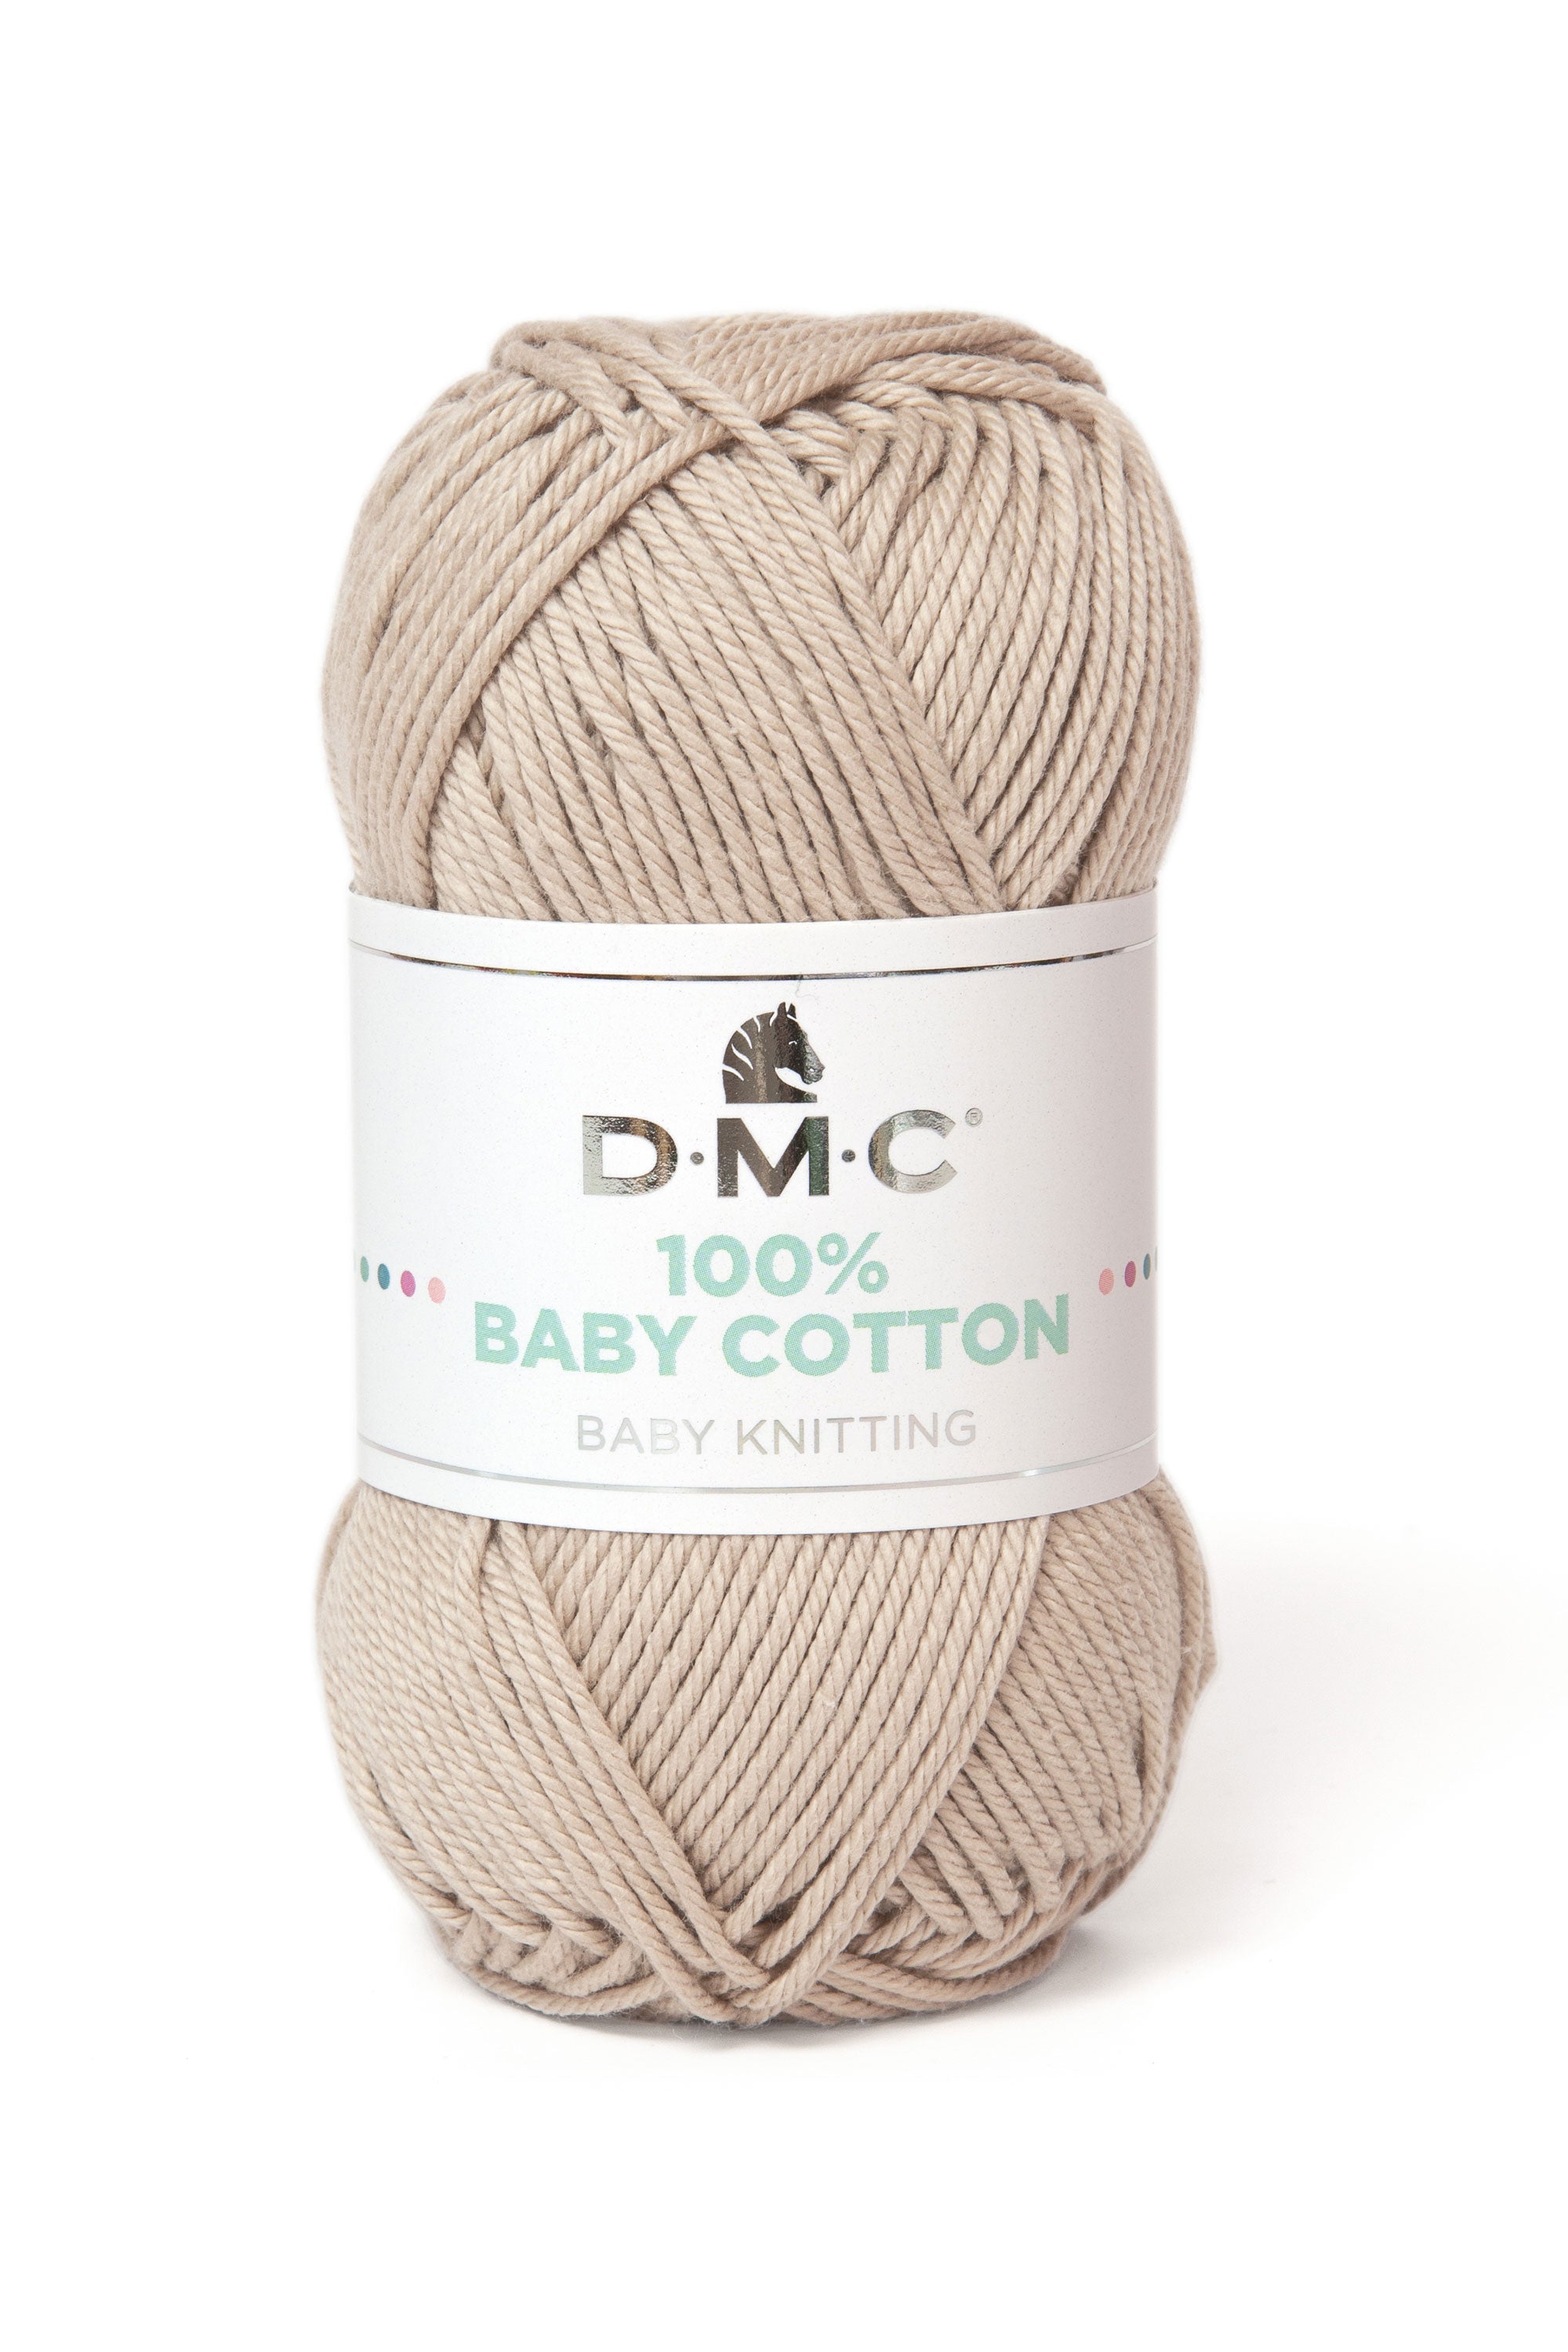 Lana Dmc 100% Baby Cotton Colore 773